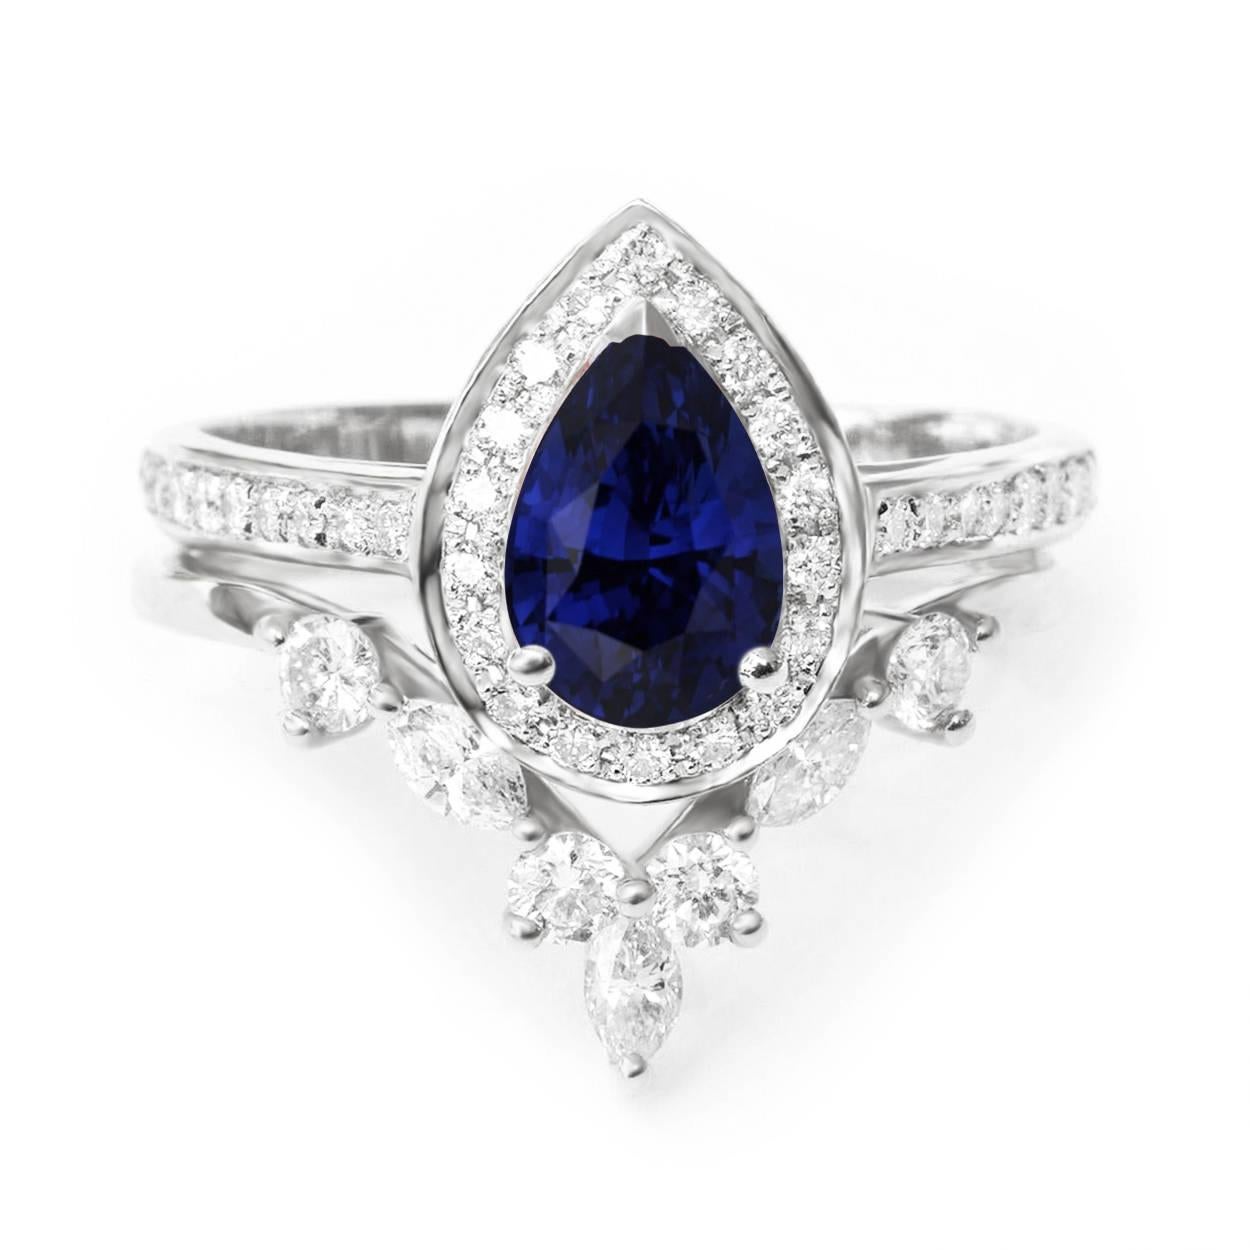 Contemporary Blue Sapphire Pear Shape & Diamonds Wedding Rings Set - 